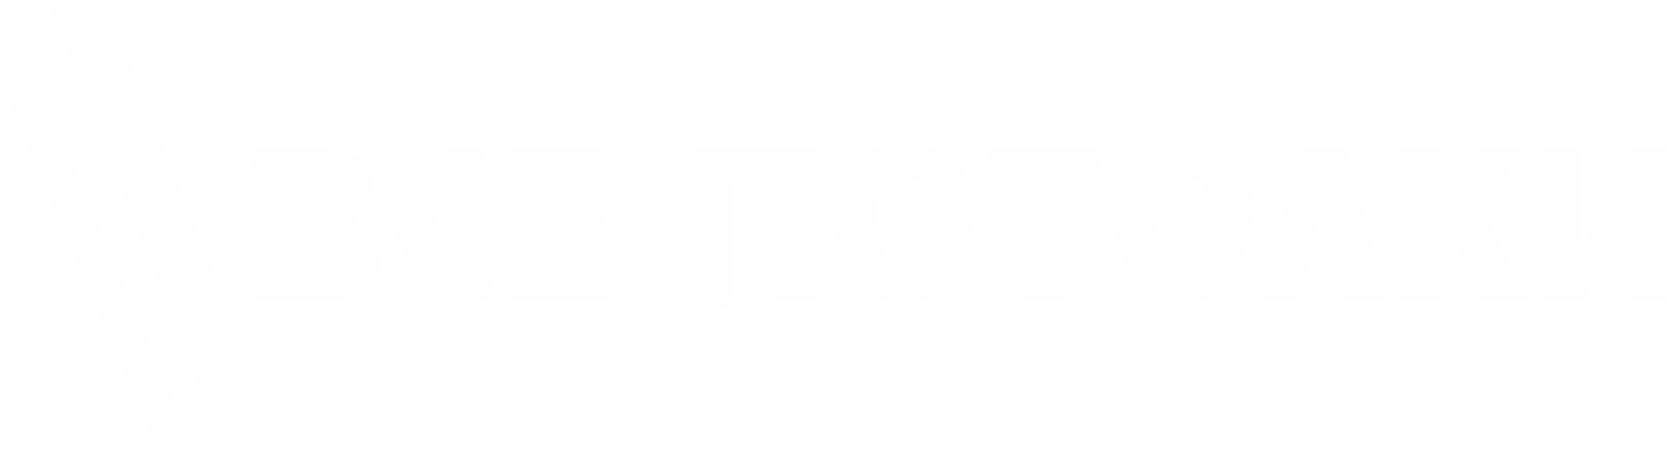 Логотип ООО "ВСЕ ПОТОЛКИ" | dizainpotolkov.ru